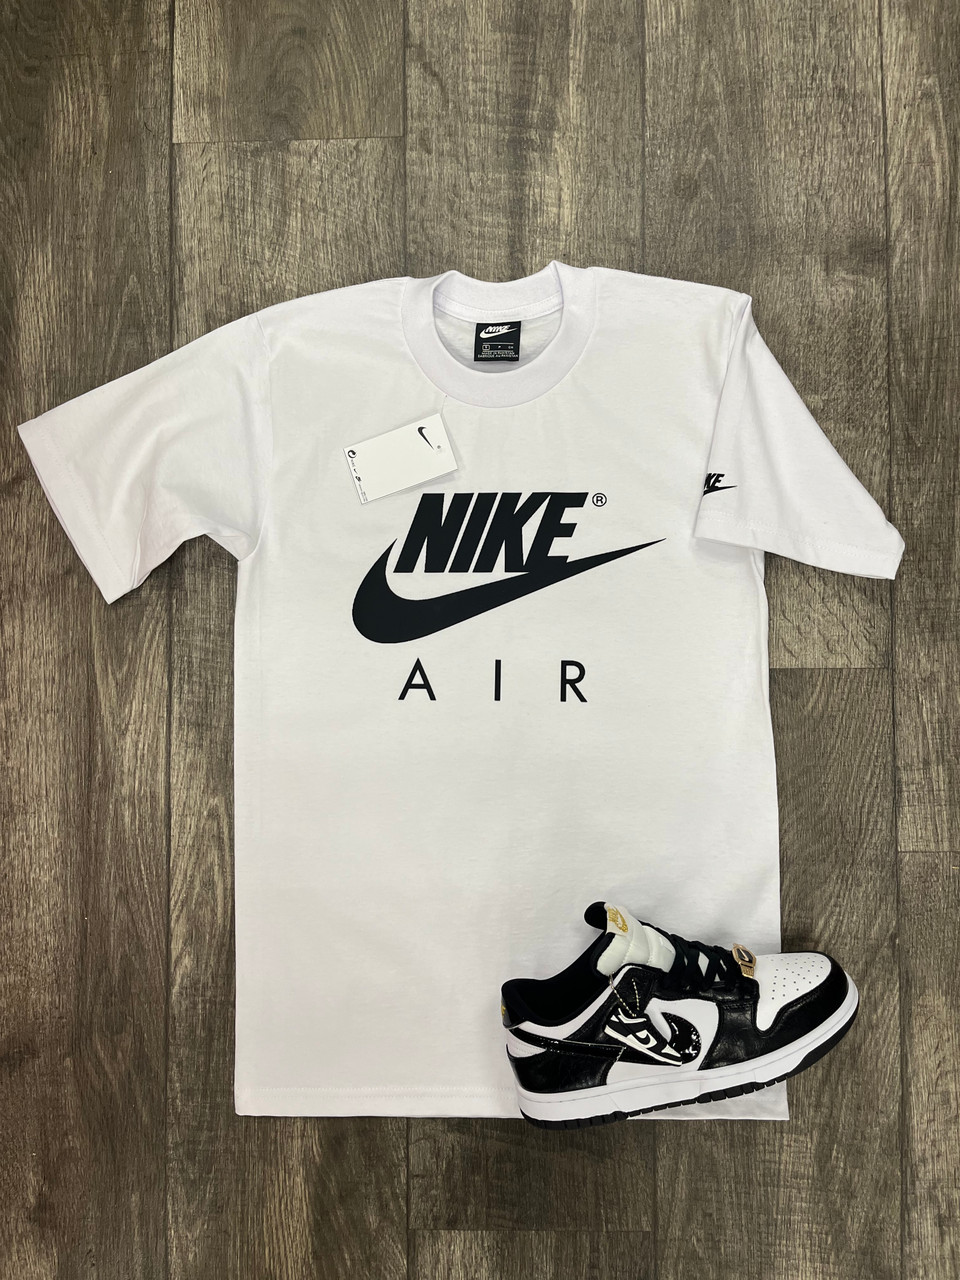 Shop Nike T Shirt Men Original Sale 2022 Medium with great